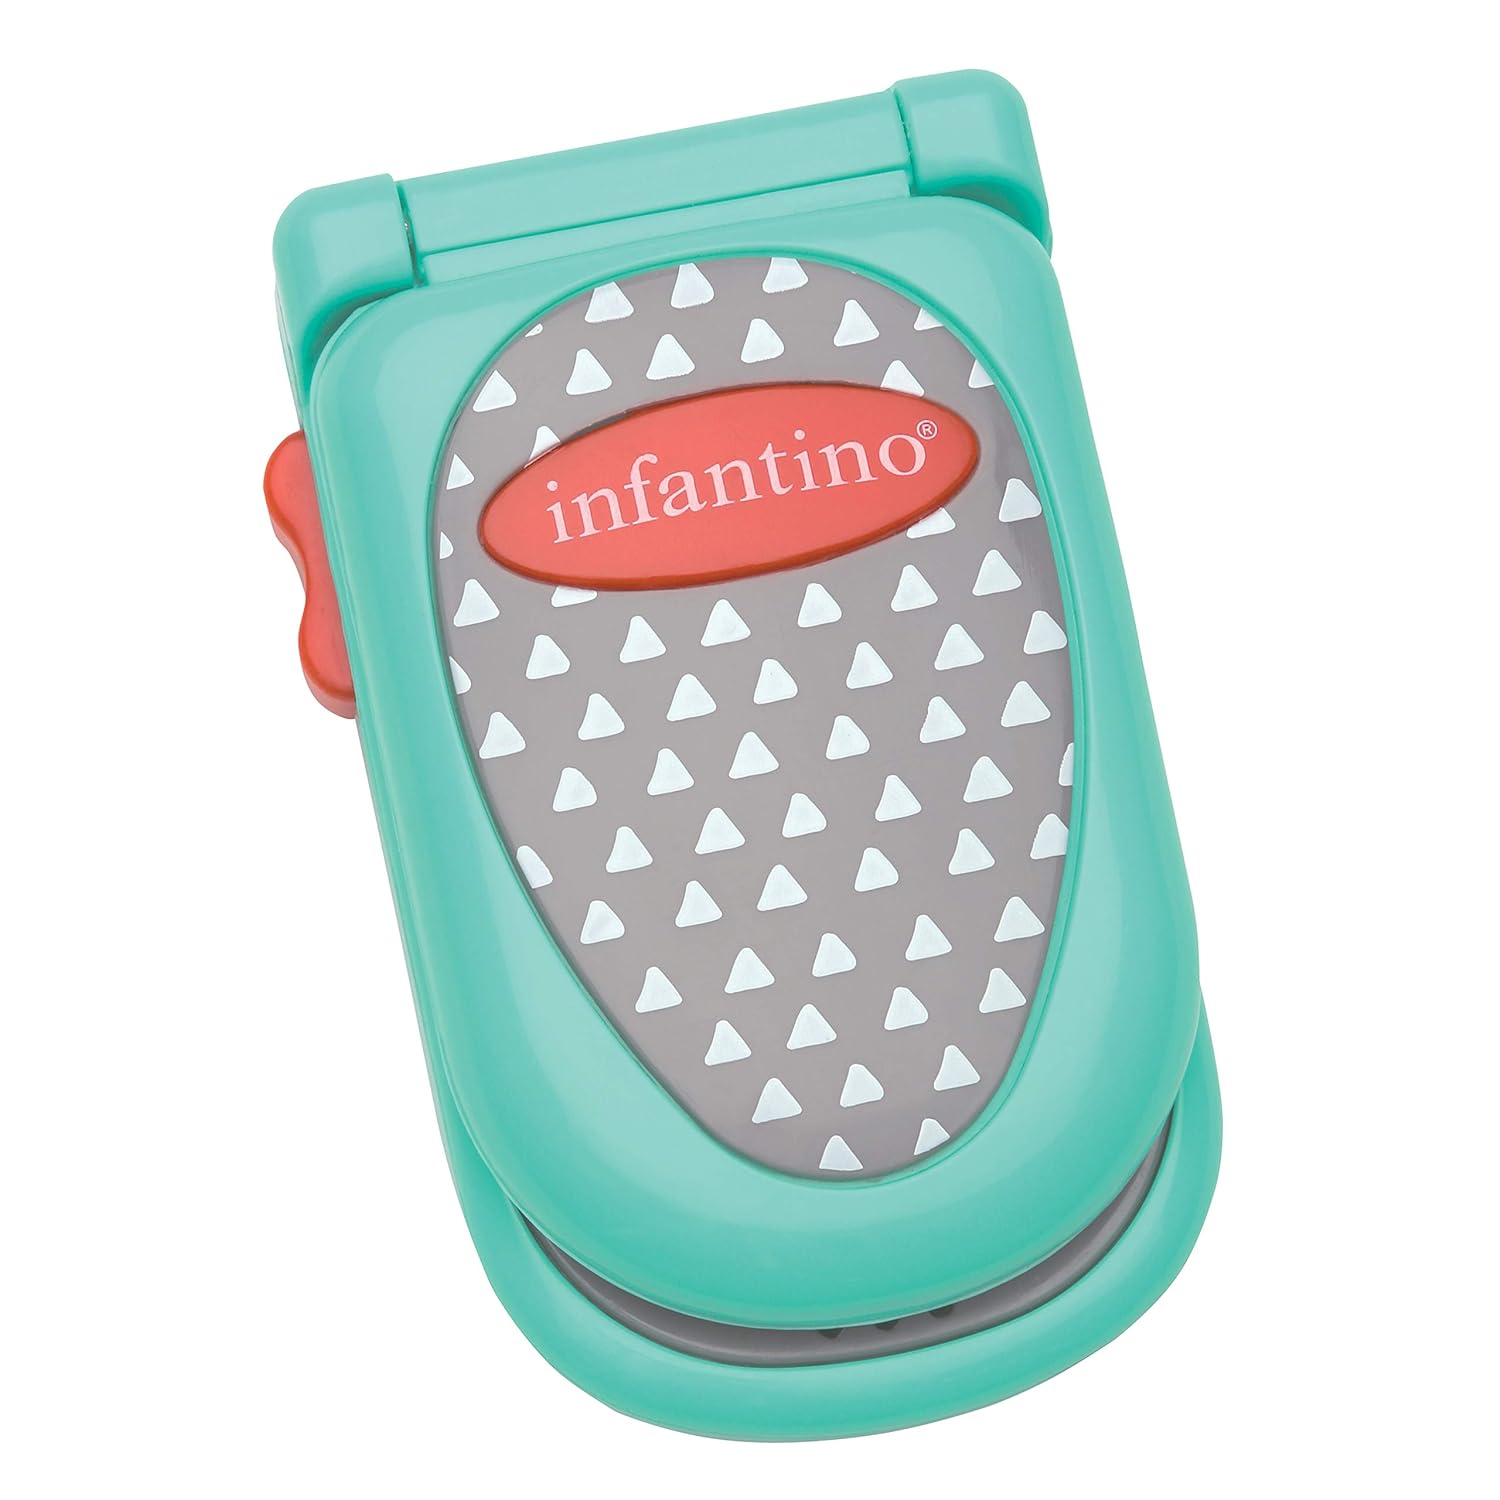 Infantino Flip and Peek Fun Phone, 3months+, Teal